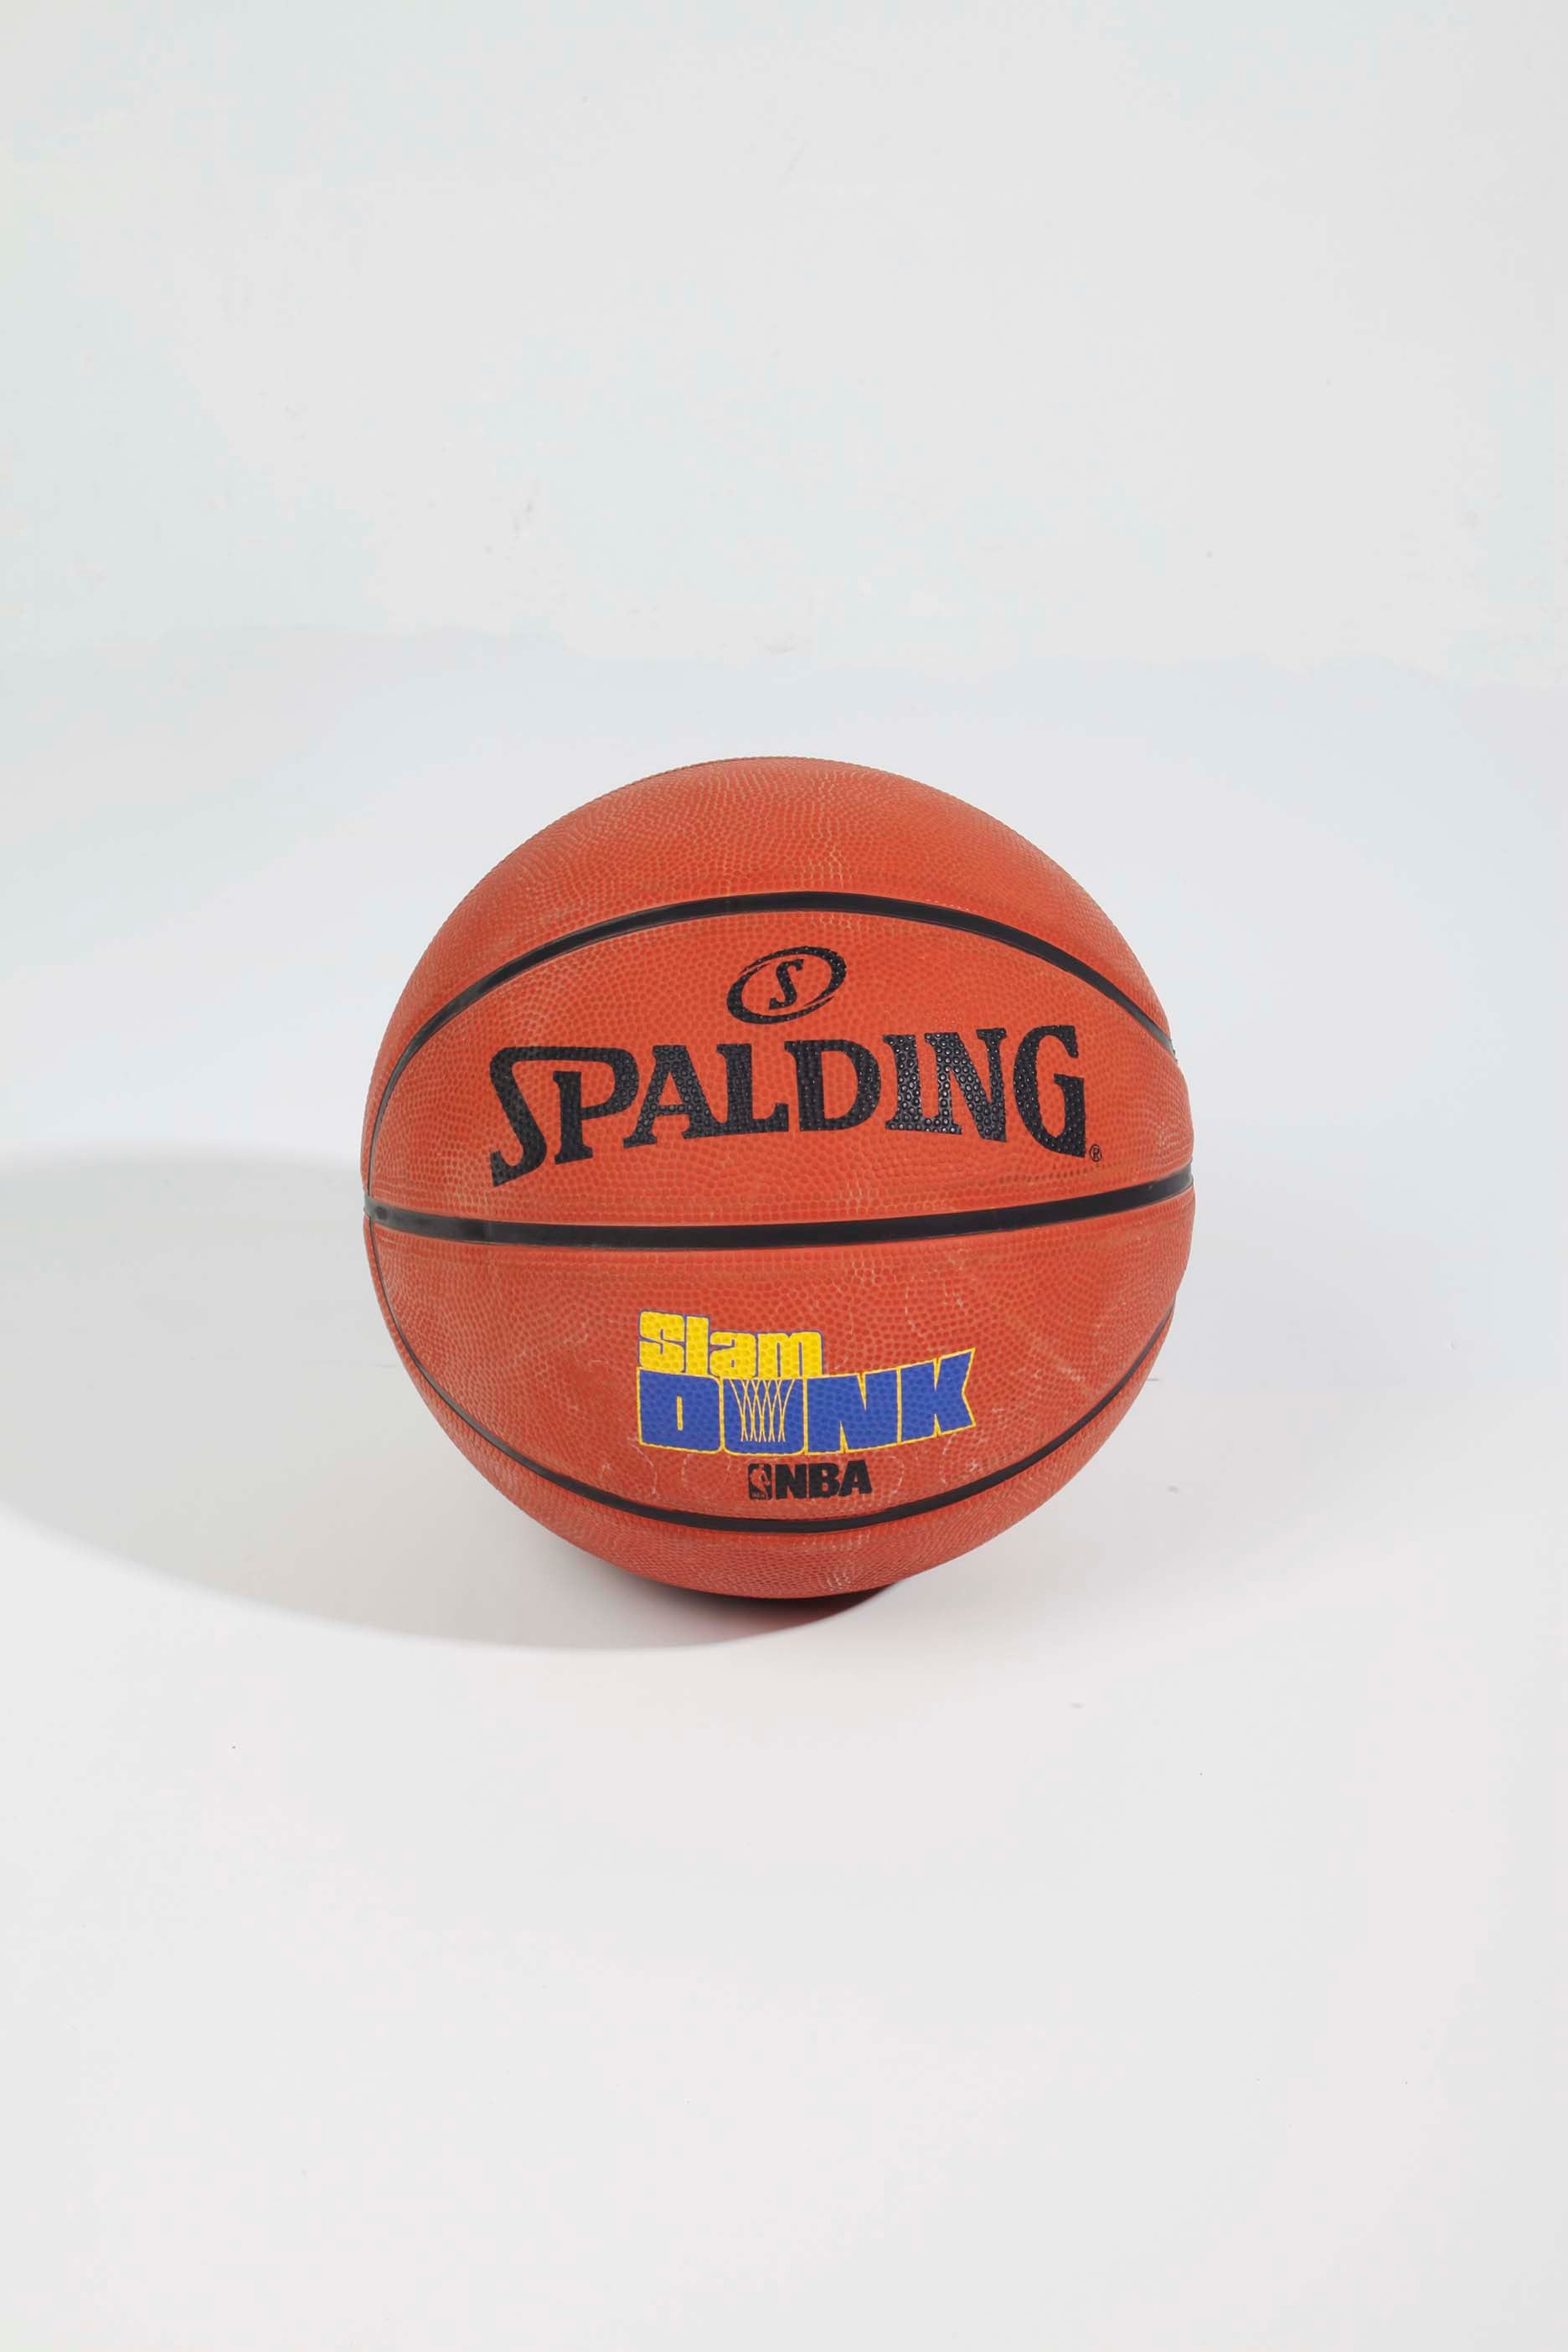 Classic Spalding Basketball